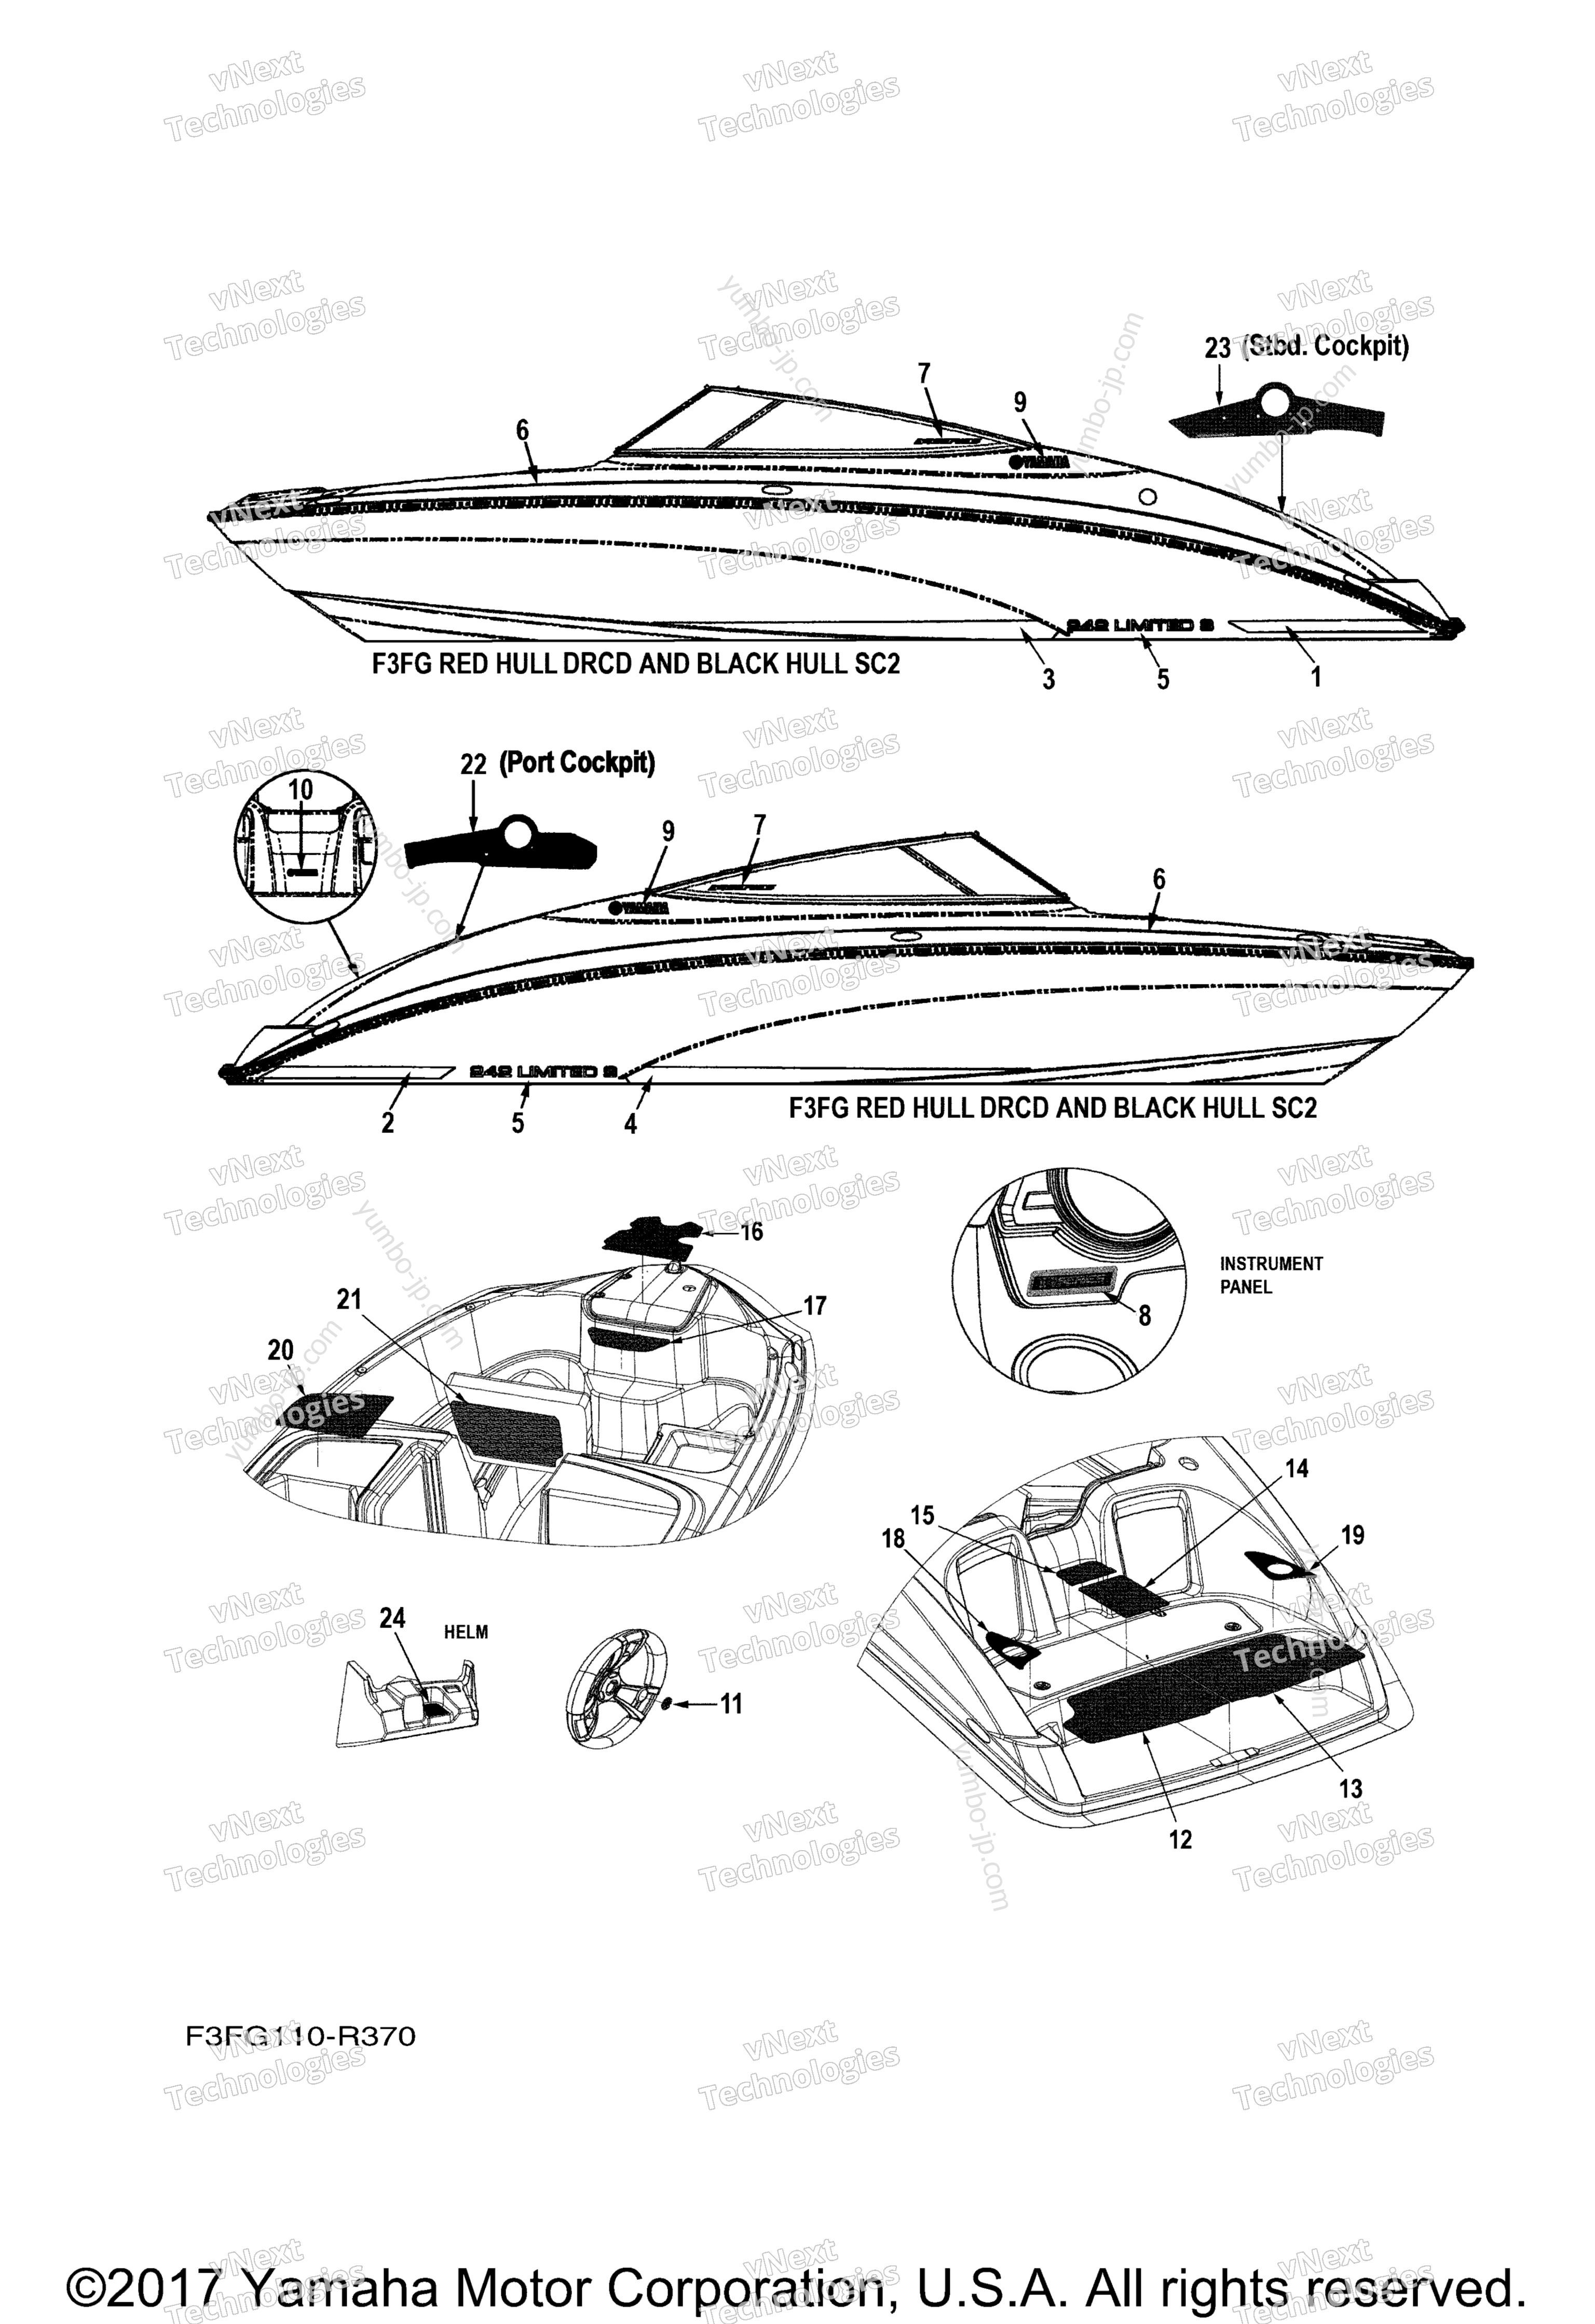 Graphics & Mats for boats YAMAHA 242 LIMITED S E SERIES CALIFORNIA (SAT1800FLR) CA 2016 year